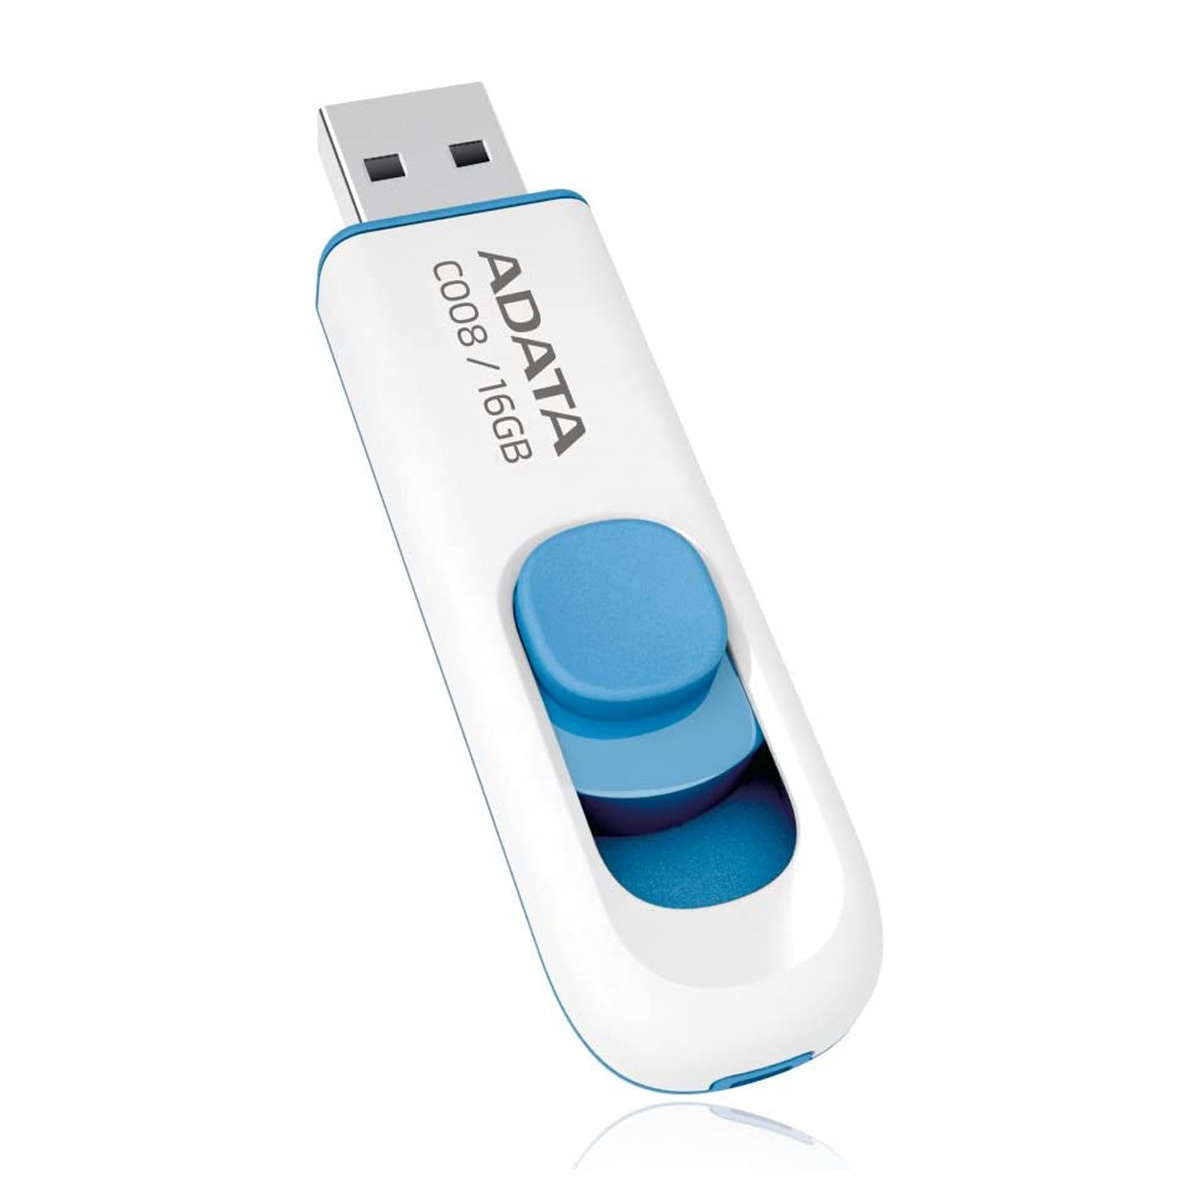 MEMORIA USB 16GB CLASICA ADATA RWE | Office Depot Honduras